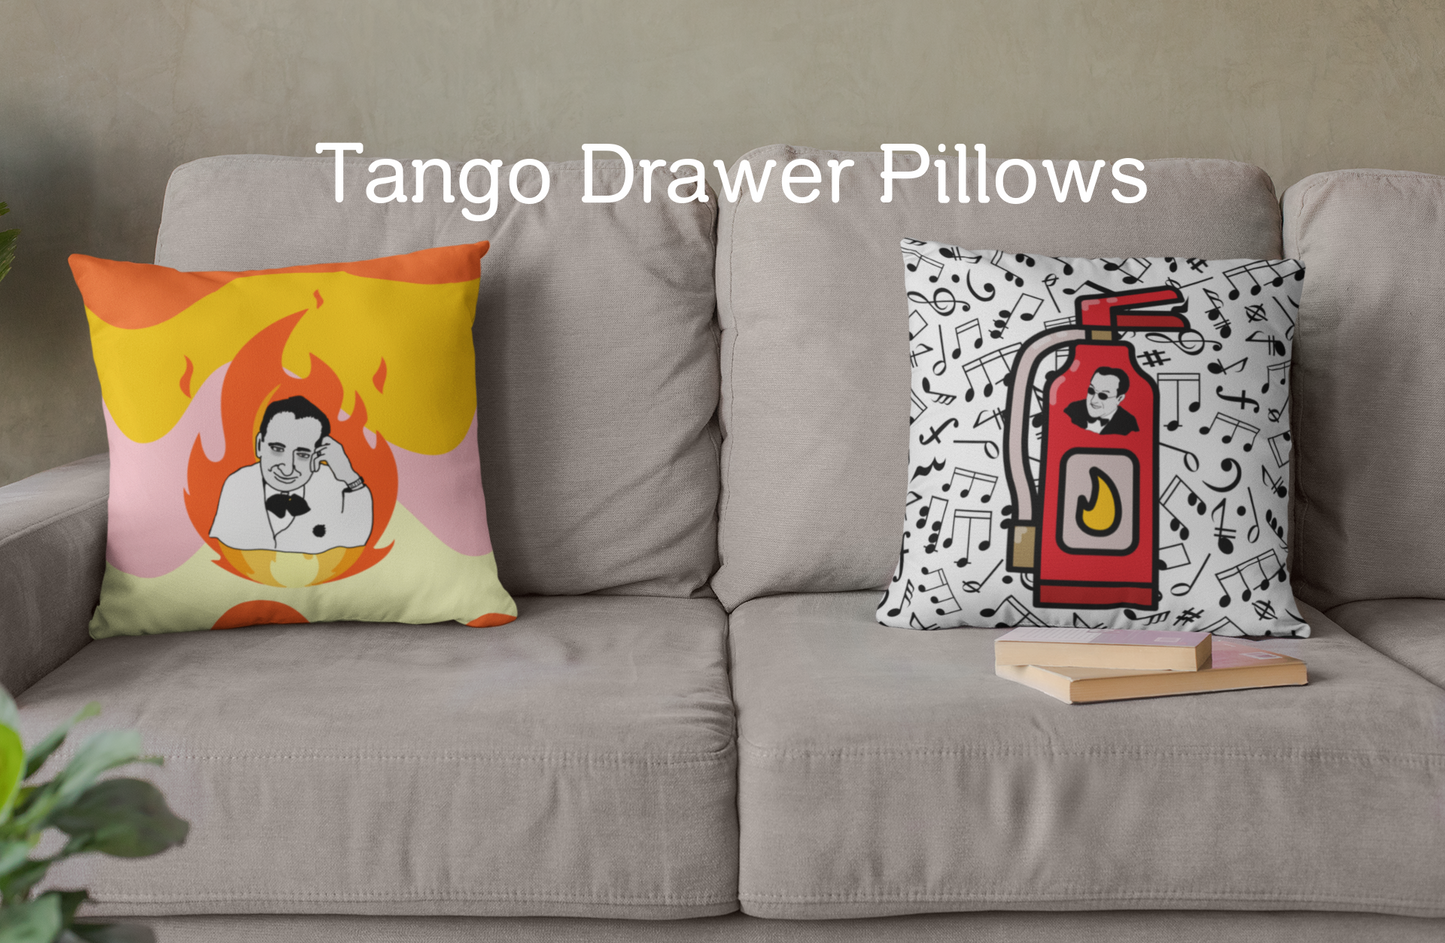 Tango Pillow (Pillowcase only) - D'Arienzo and Di Sarli